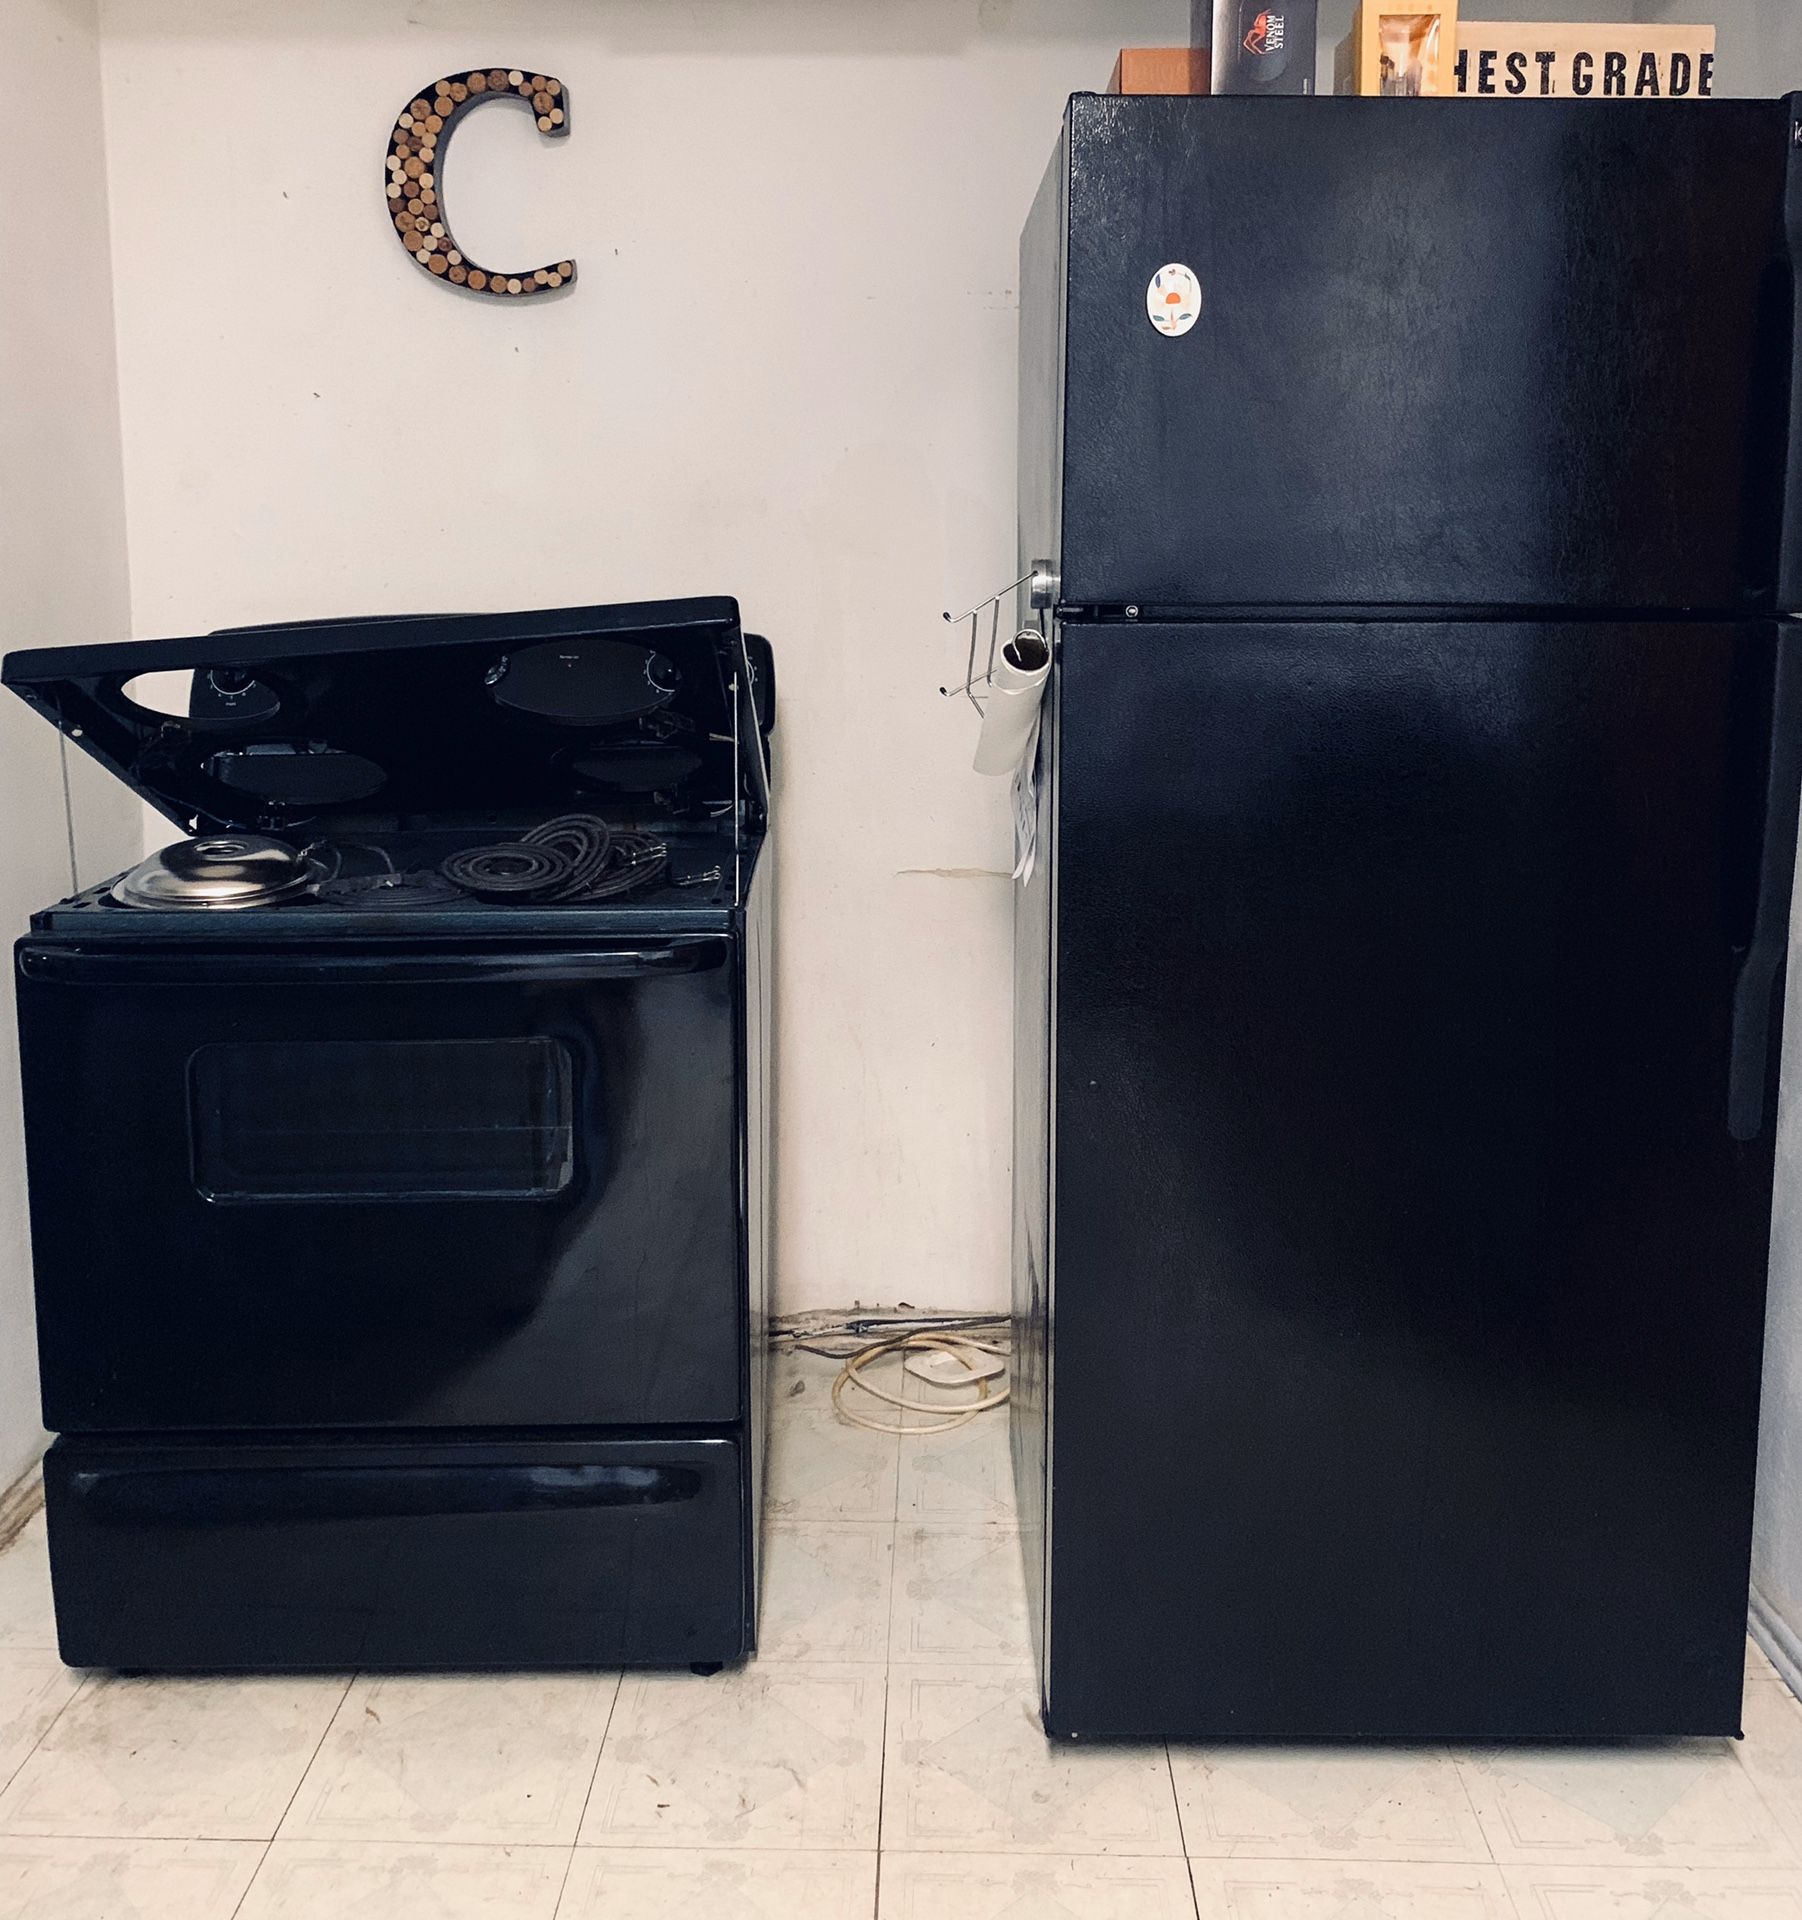 Kitchen Appliances- Stove, Refrigerator, Microwave